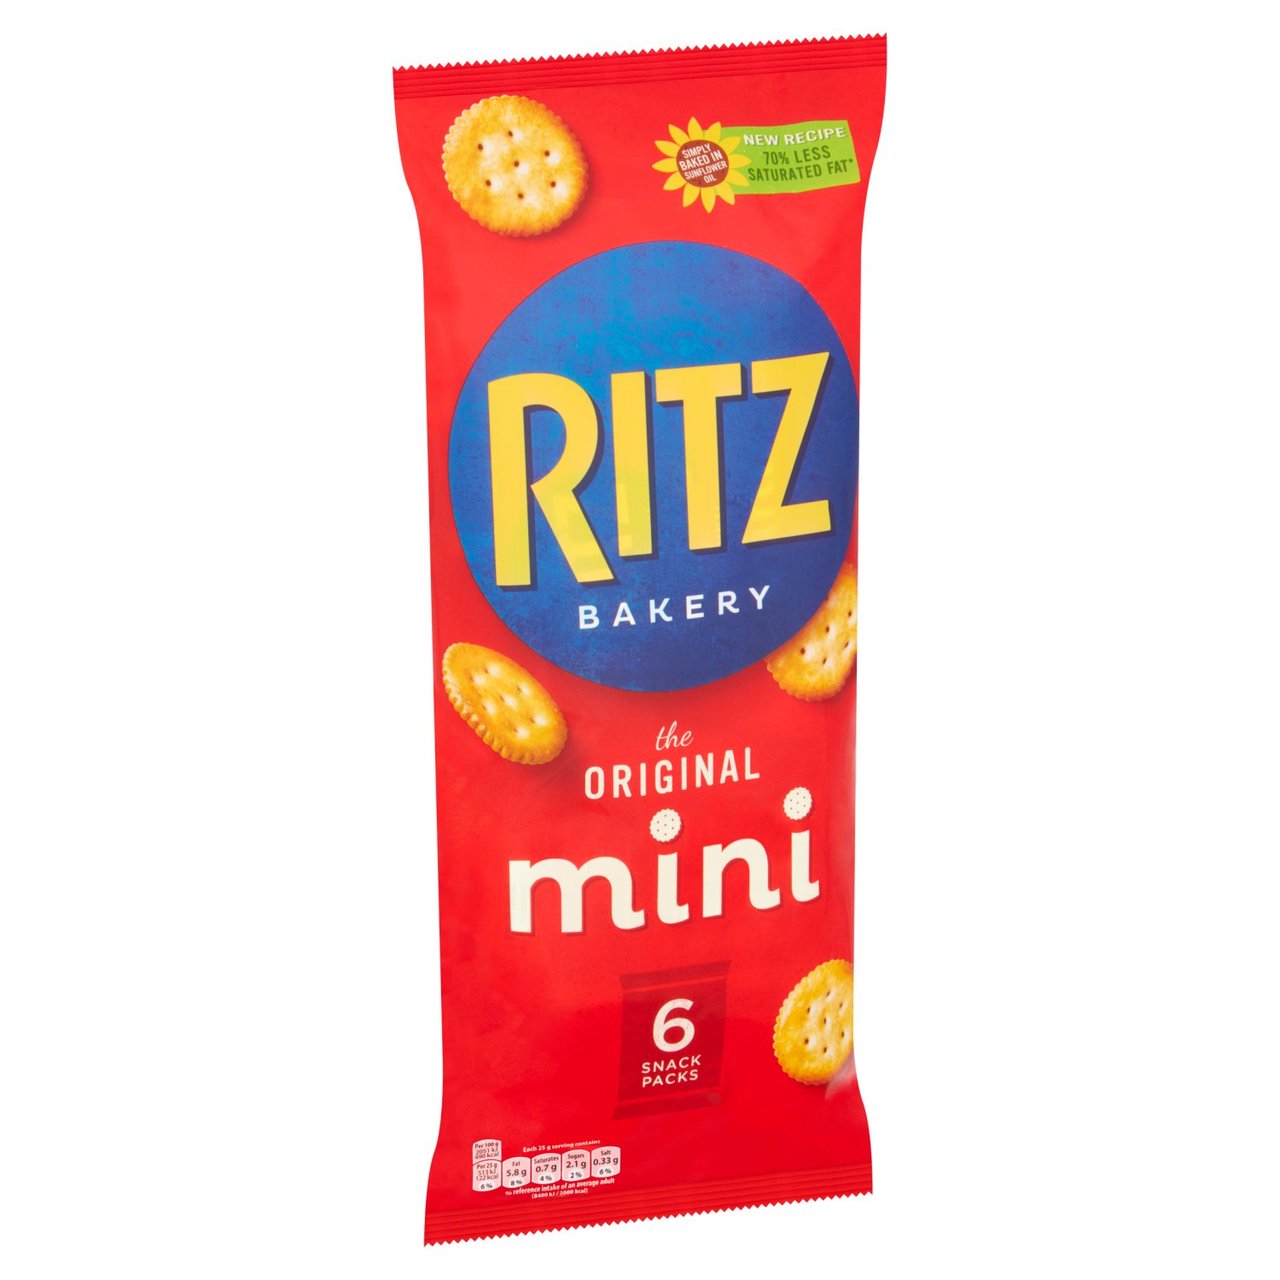 Mini Ritz Crackers Original 25g x 6 per pack